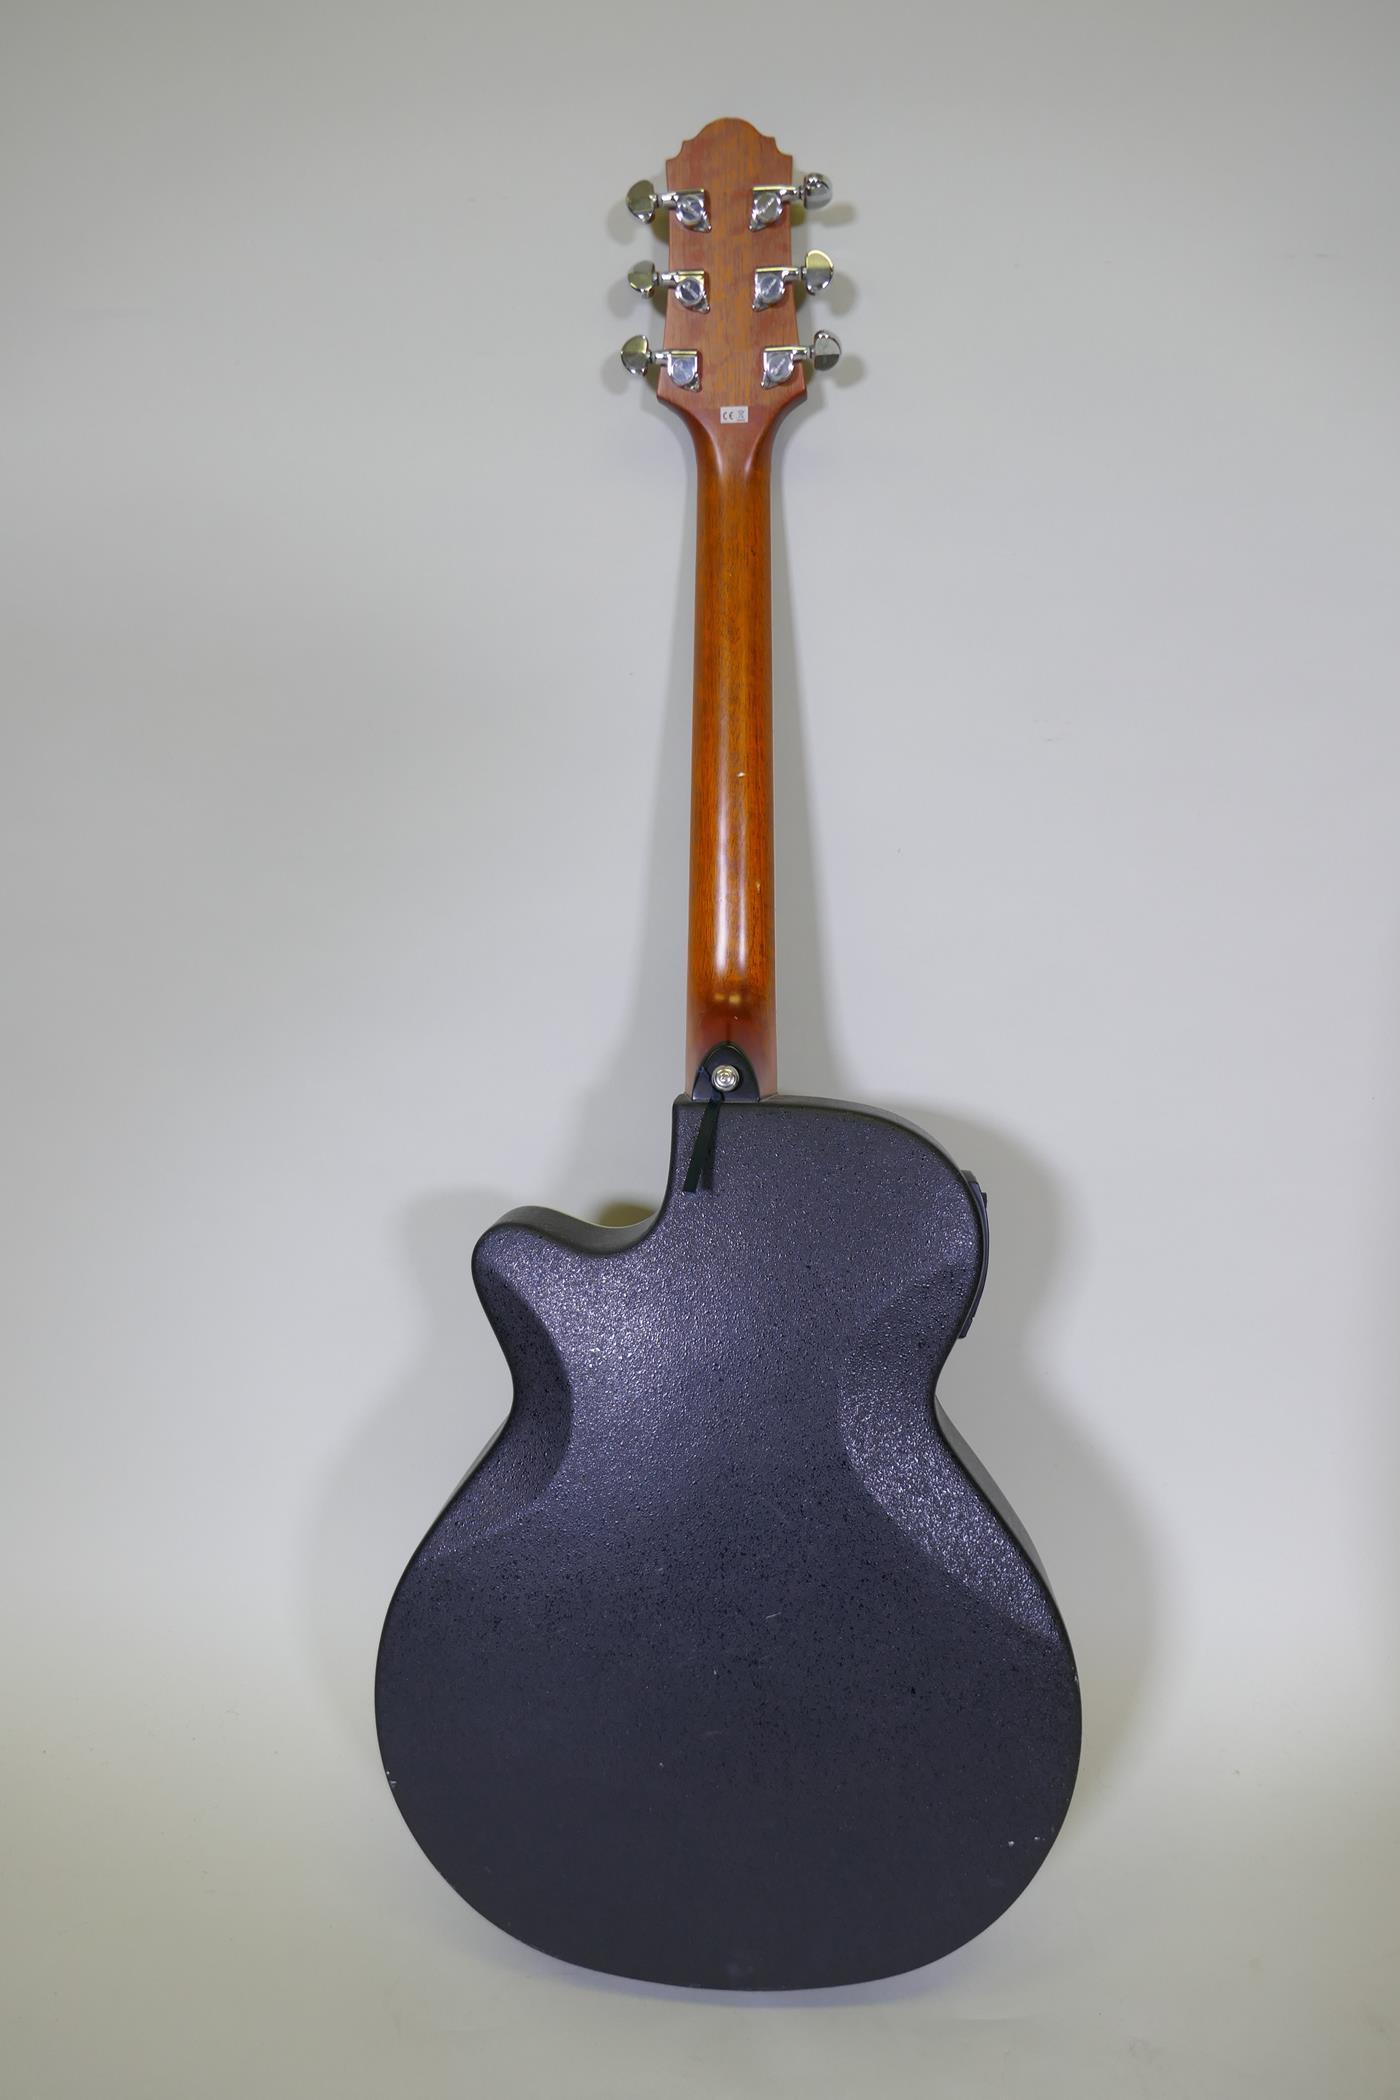 A Crafter fibreglass model FX550 EQ electro acoustic guitar - Image 4 of 4